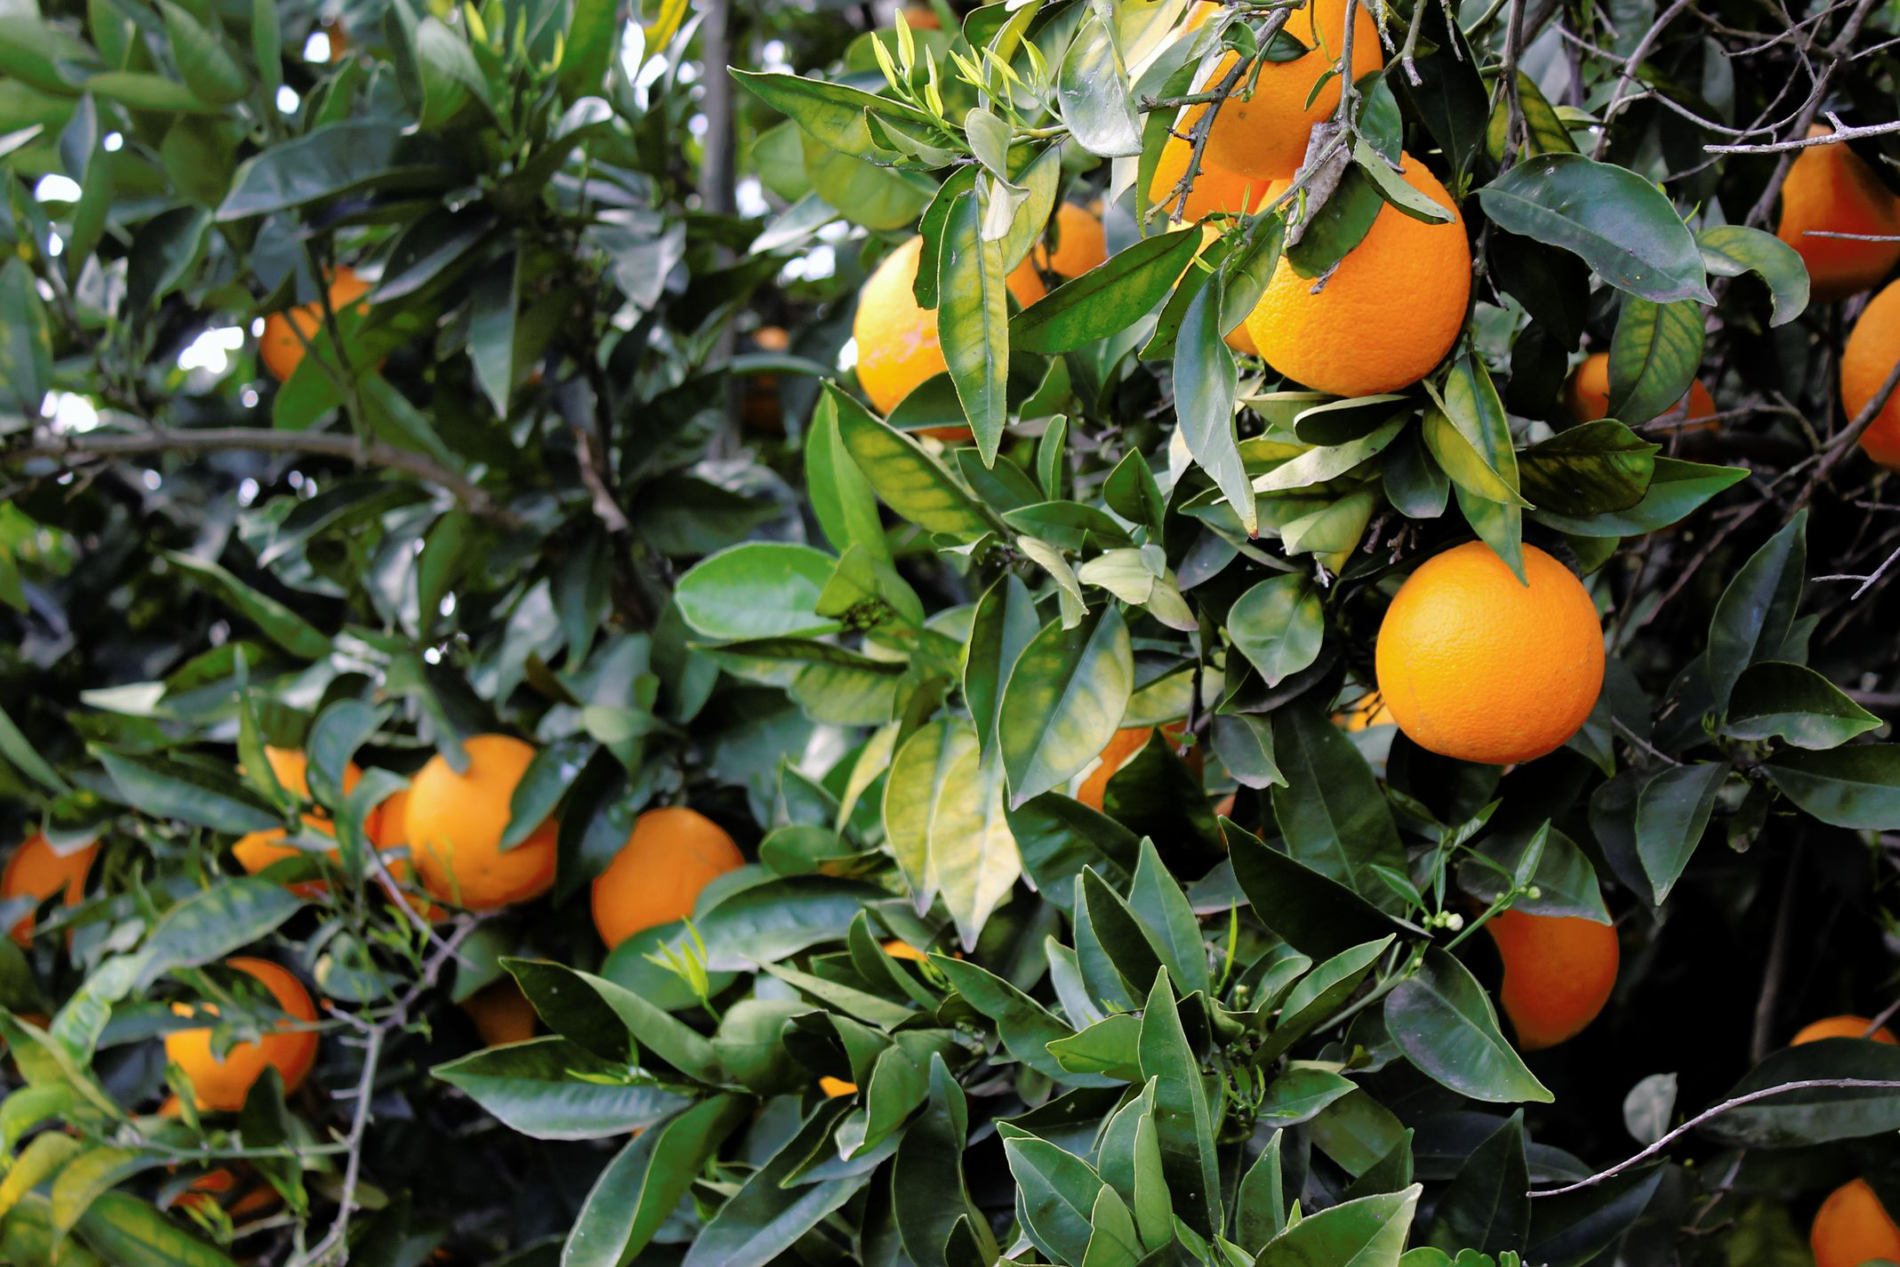 Several oranges hanging on a lush orange tree